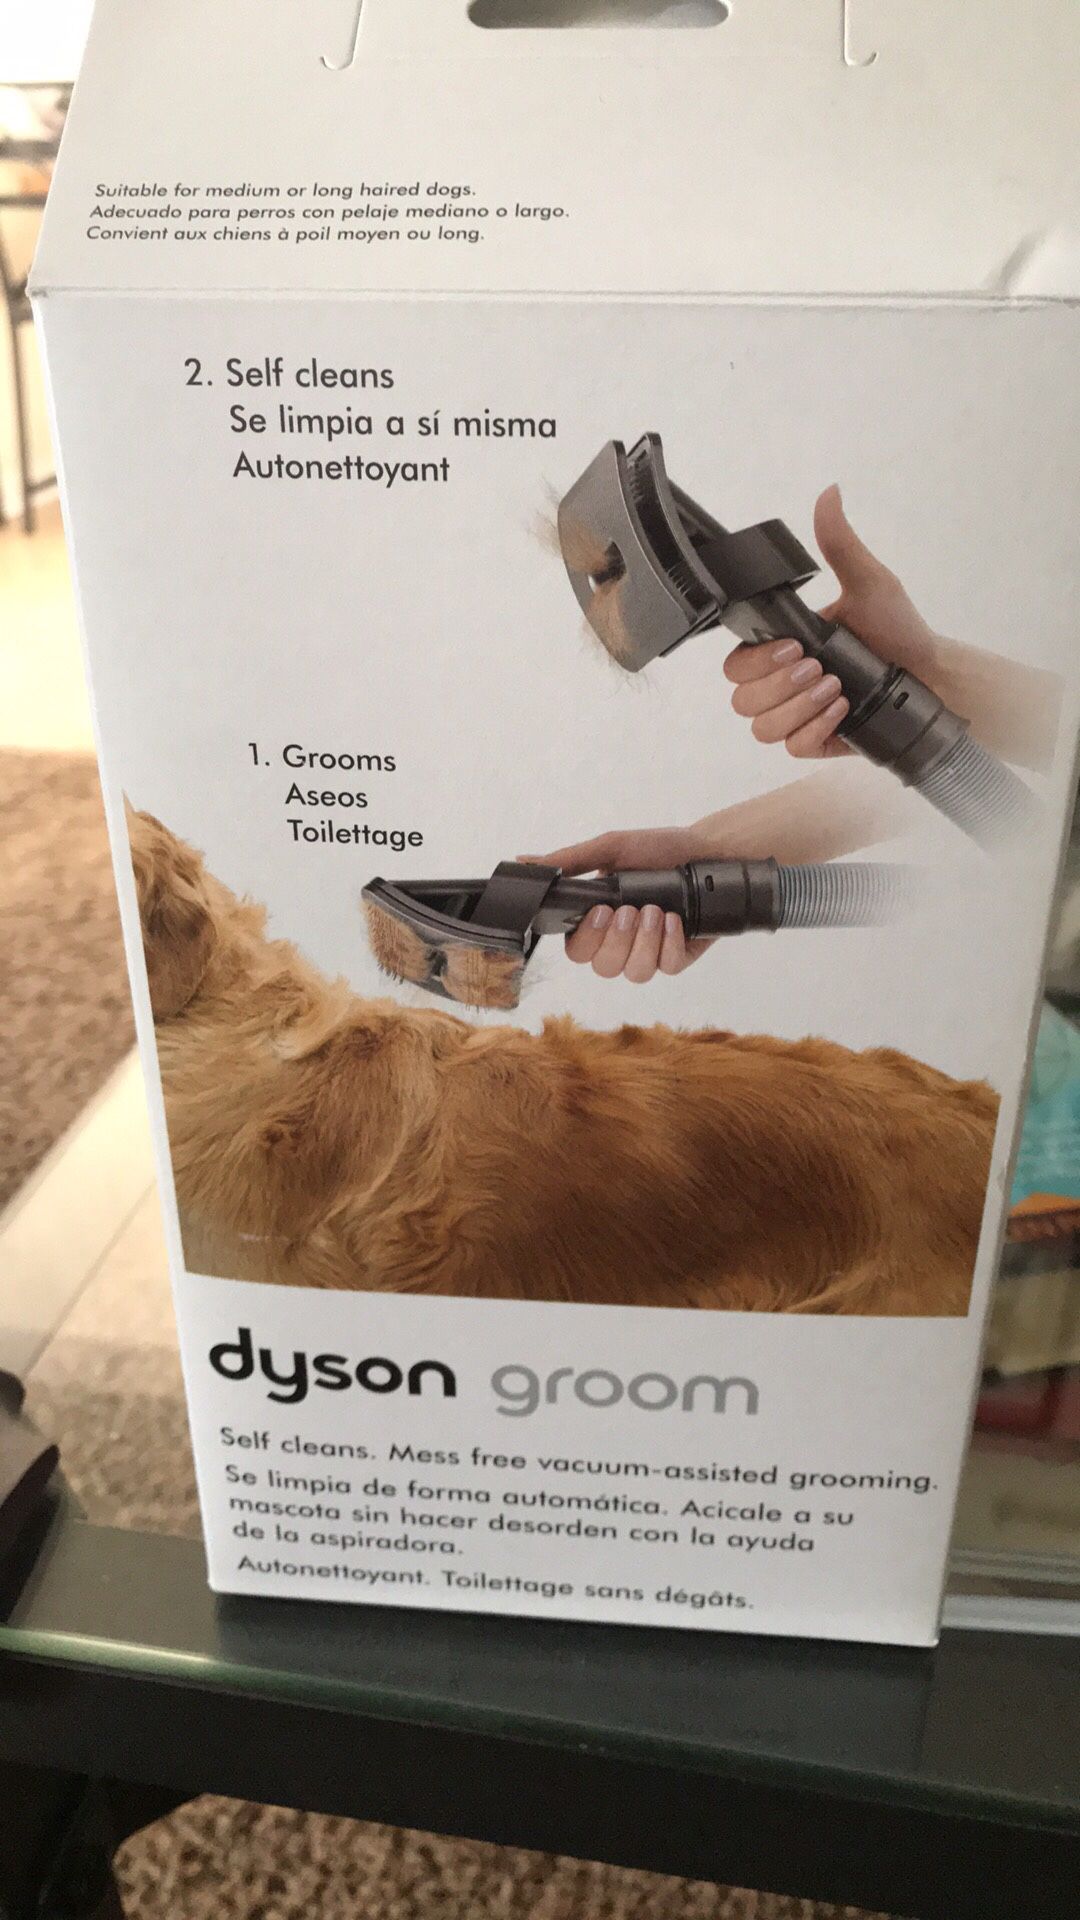 Dyson Groom - Never used!